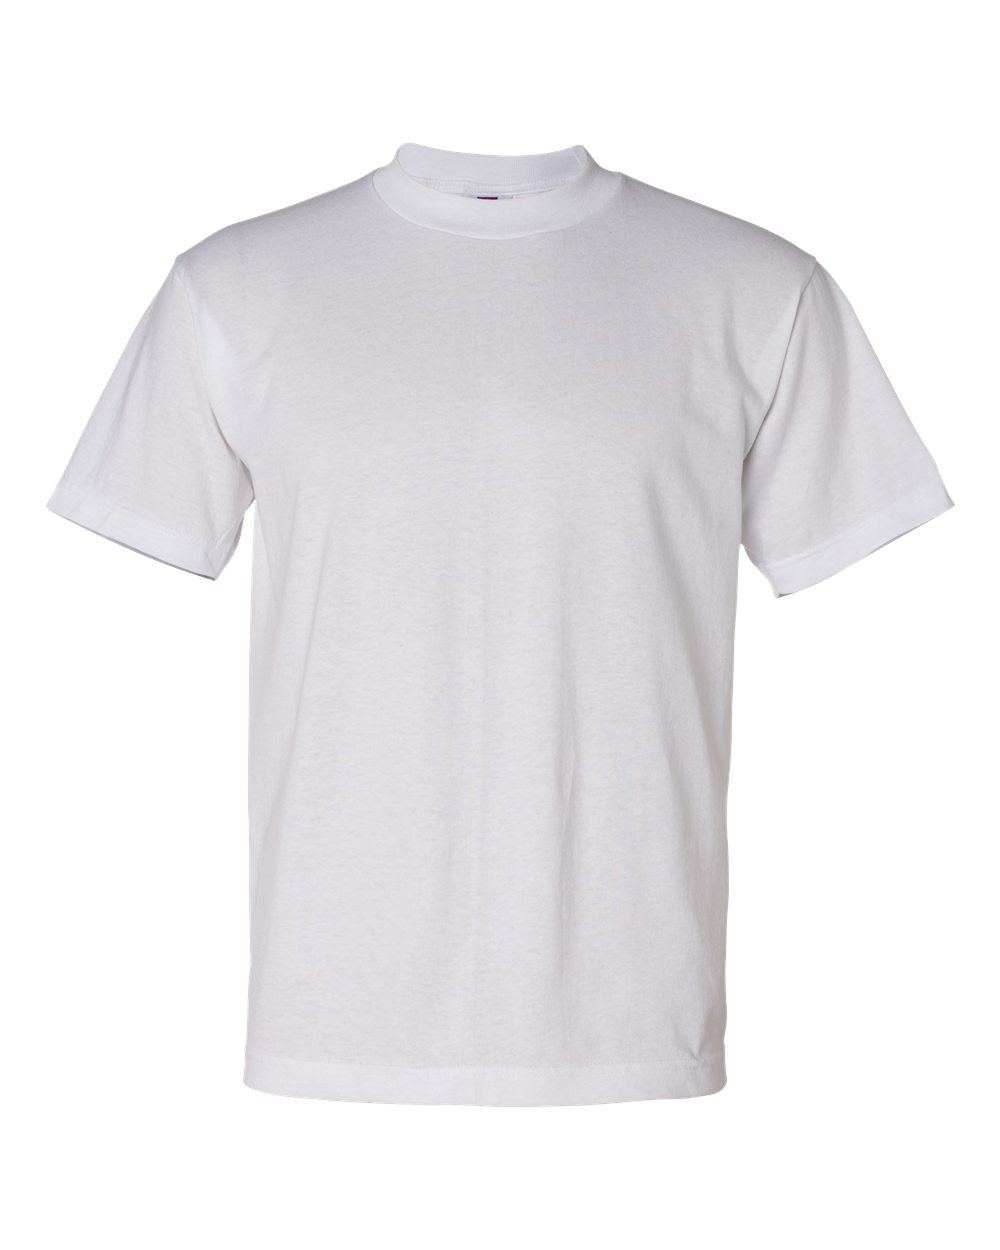 USA-Made 50/50 Short Sleeve T-Shirt-Bayside